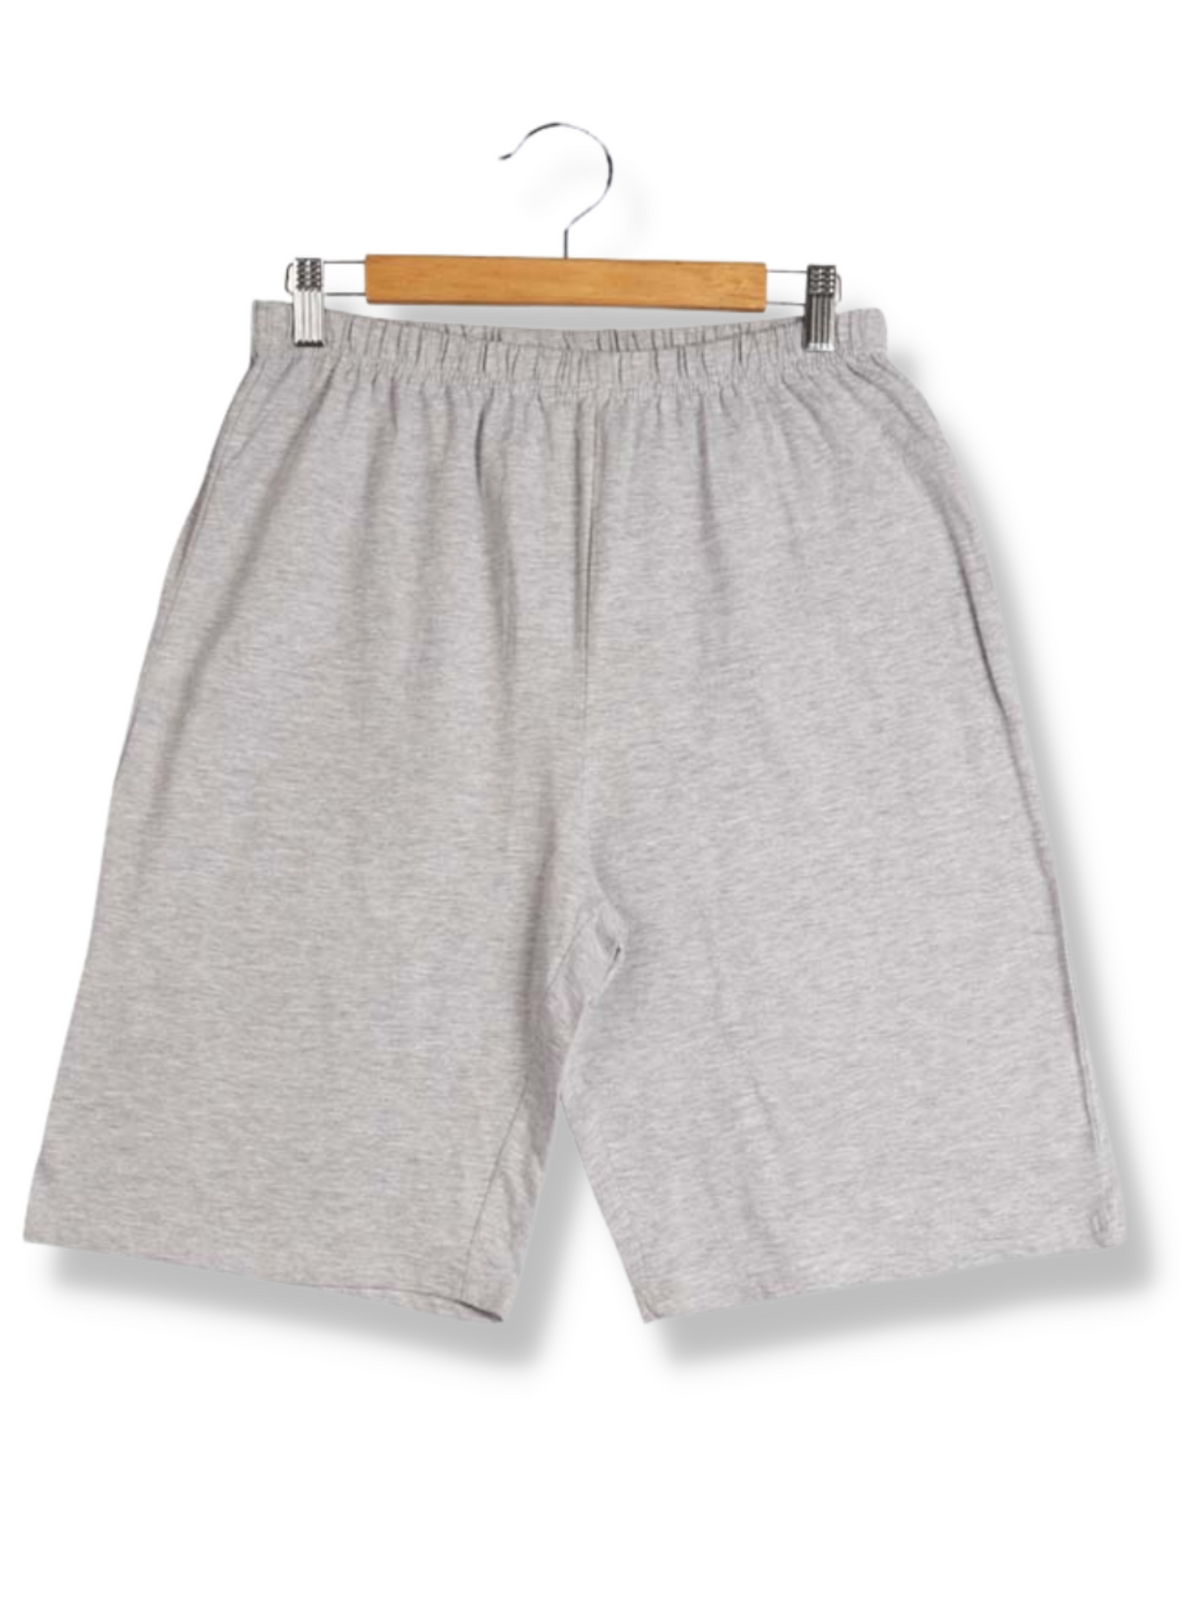 Mens Grey Solid Single Jersey Shorts